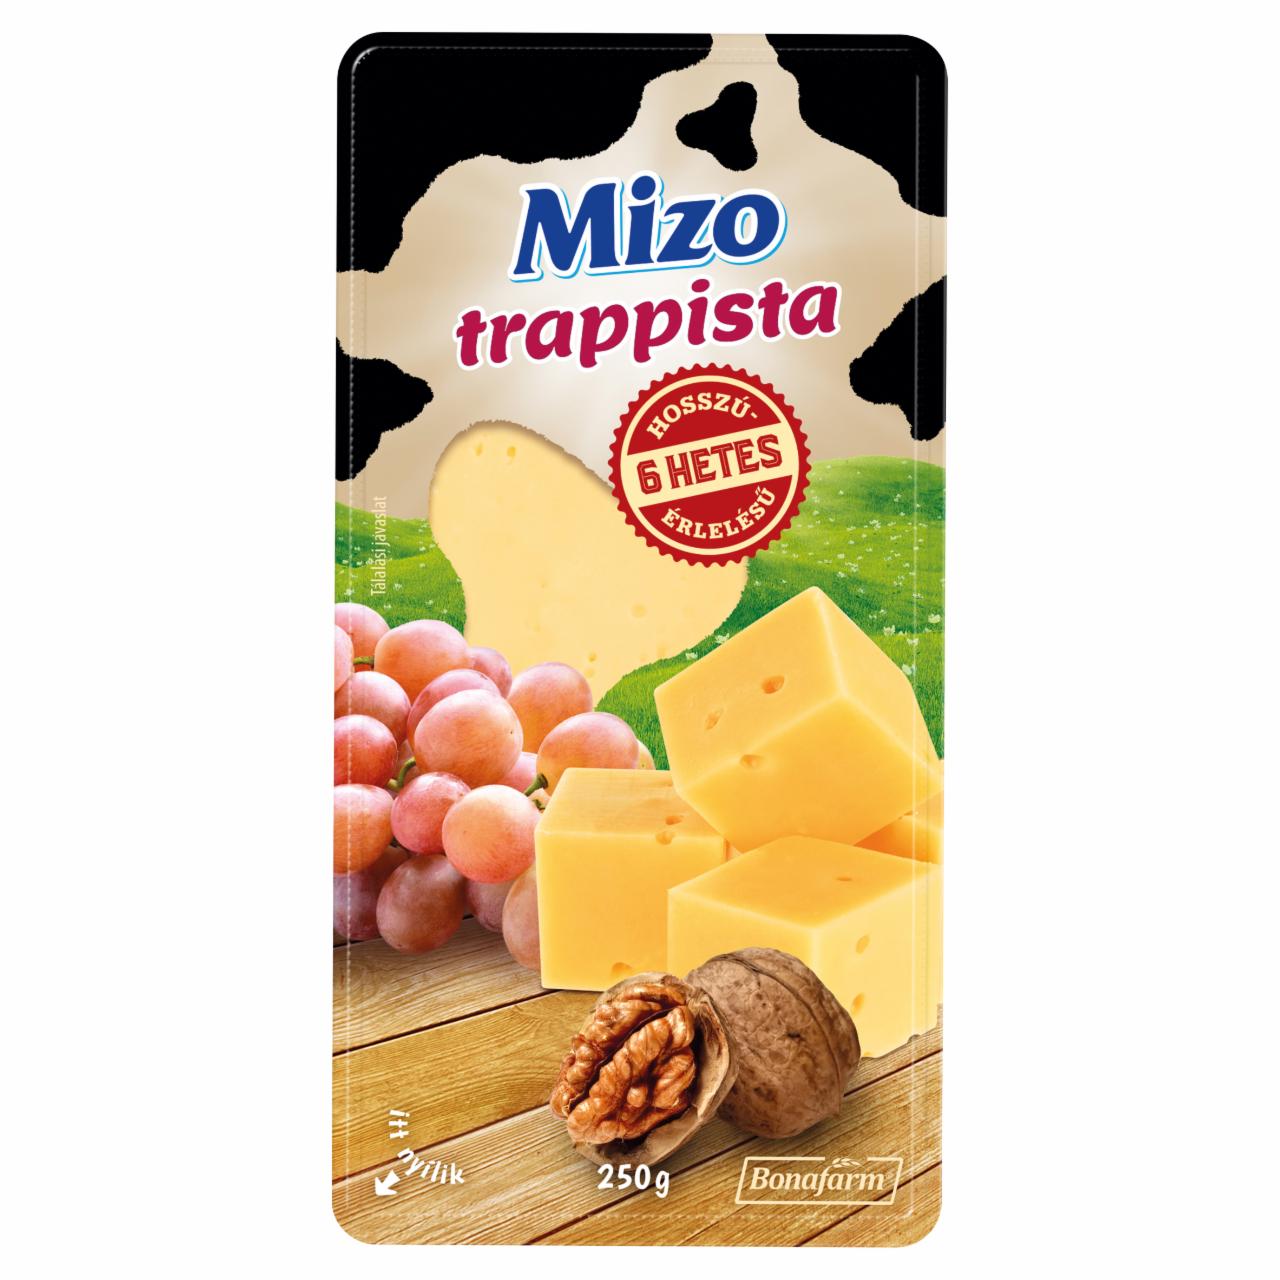 Képek - Mizo hosszú érlelésű trappista sajt 250 g